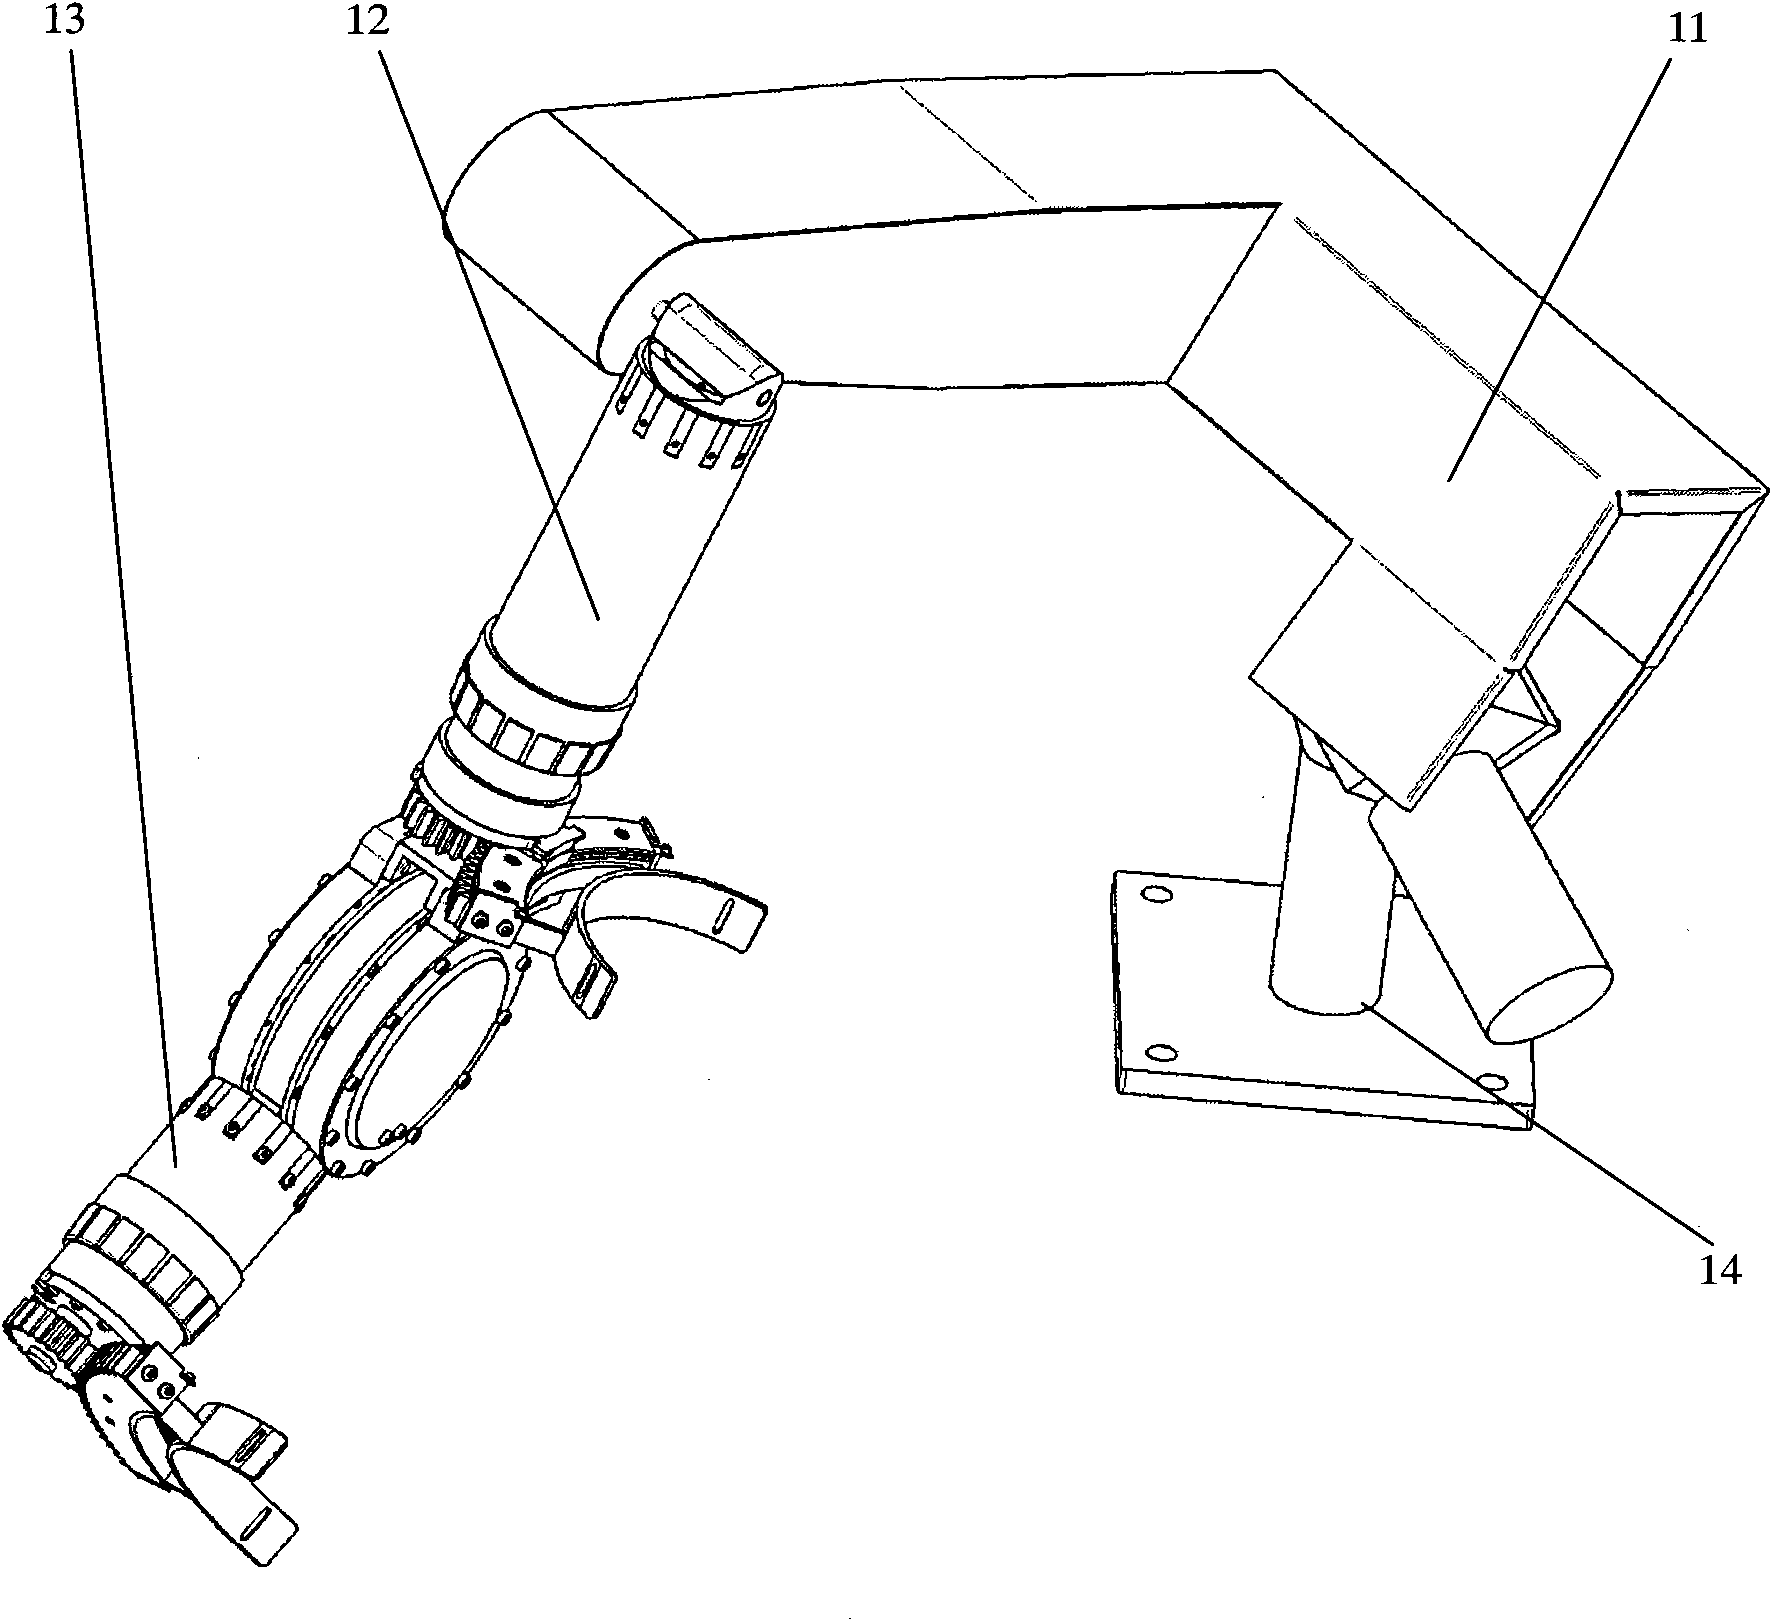 Exoskeleton type upper limb rehabilitation robot